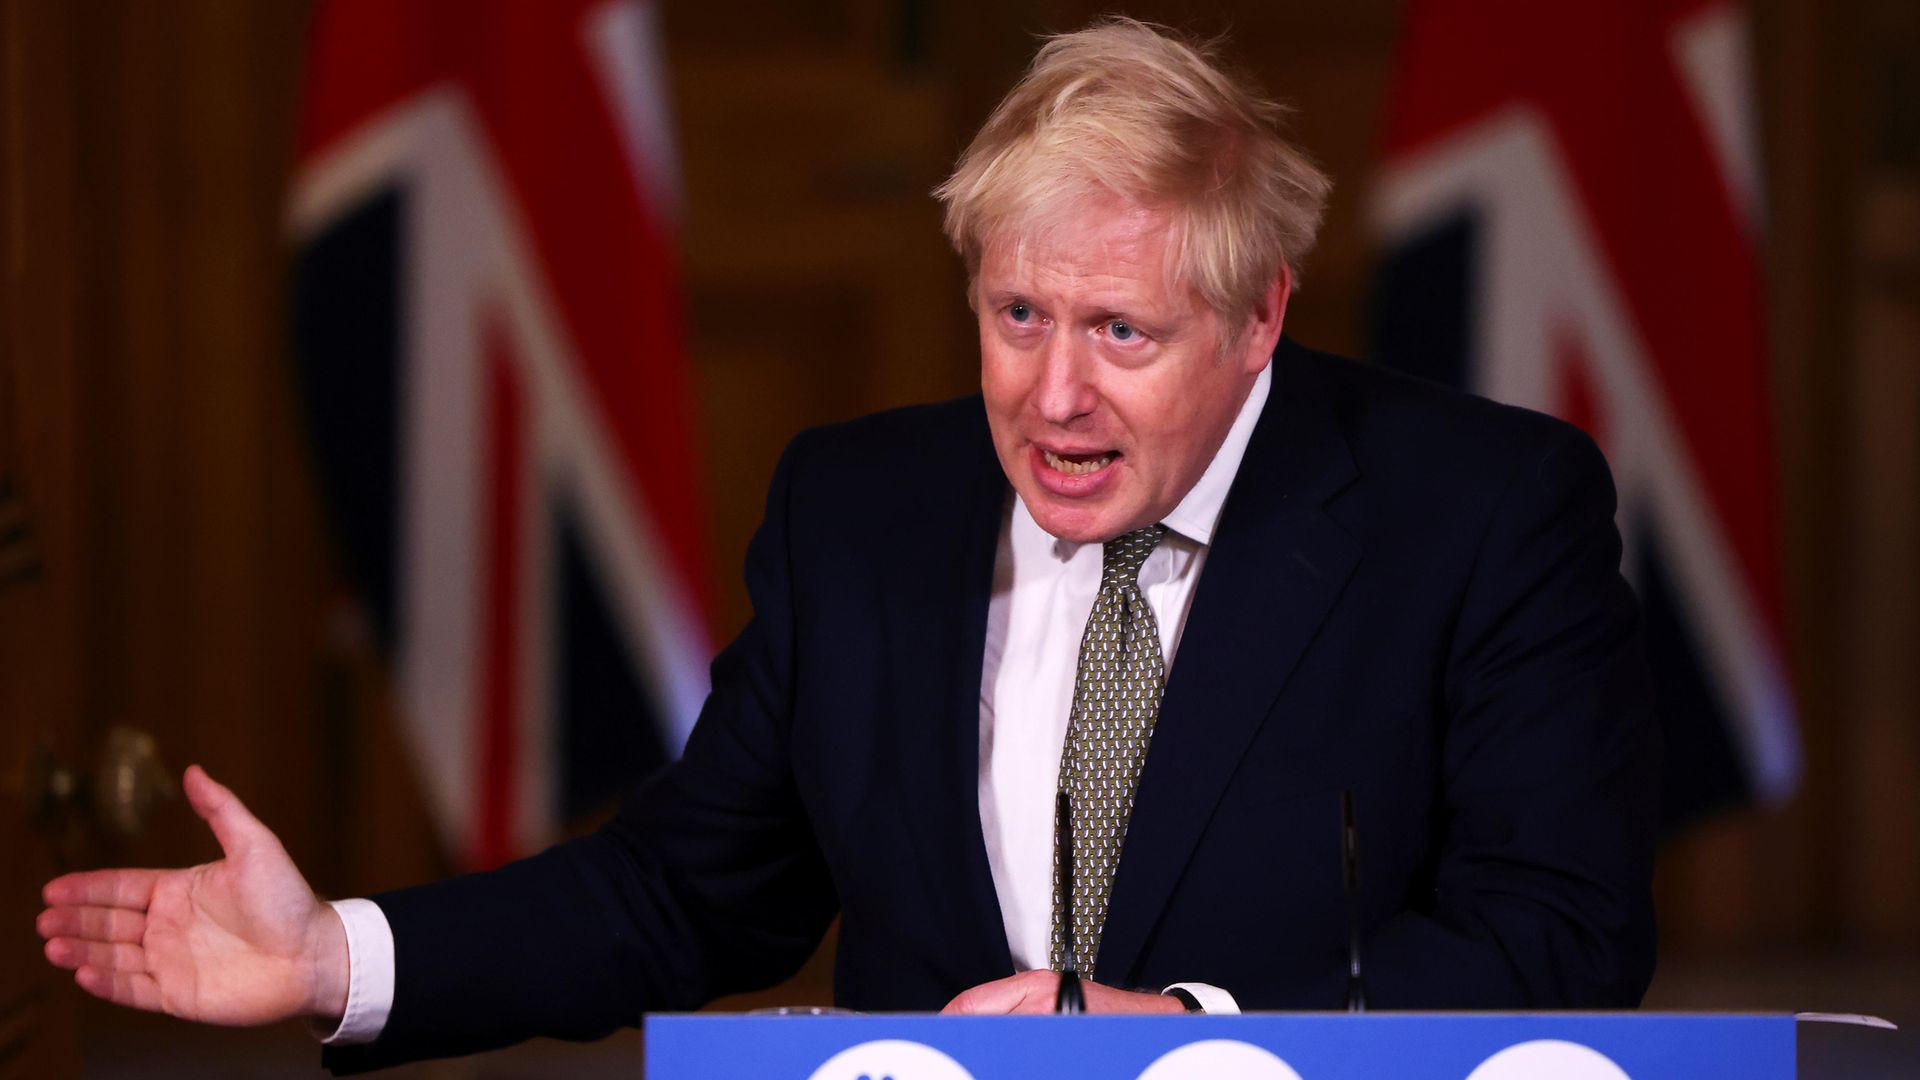 Prime Minister Boris Johnson during a media briefing on coronavirus (COVID-19) - Credit: PA